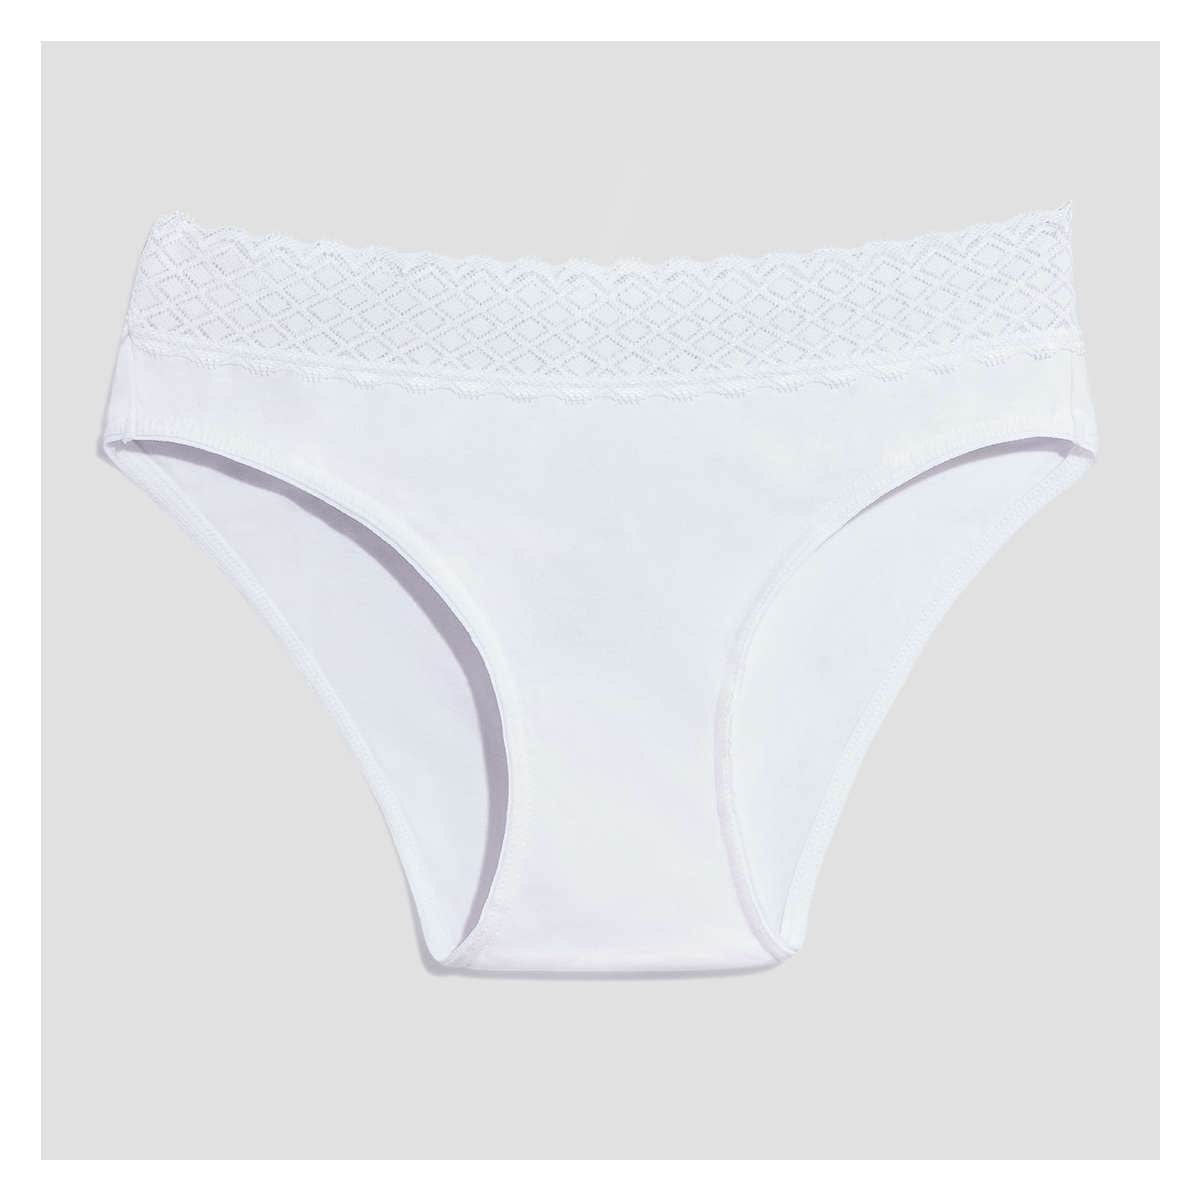 Tommy Hilfiger Women's Cotton Iconic Bikini Briefs - White